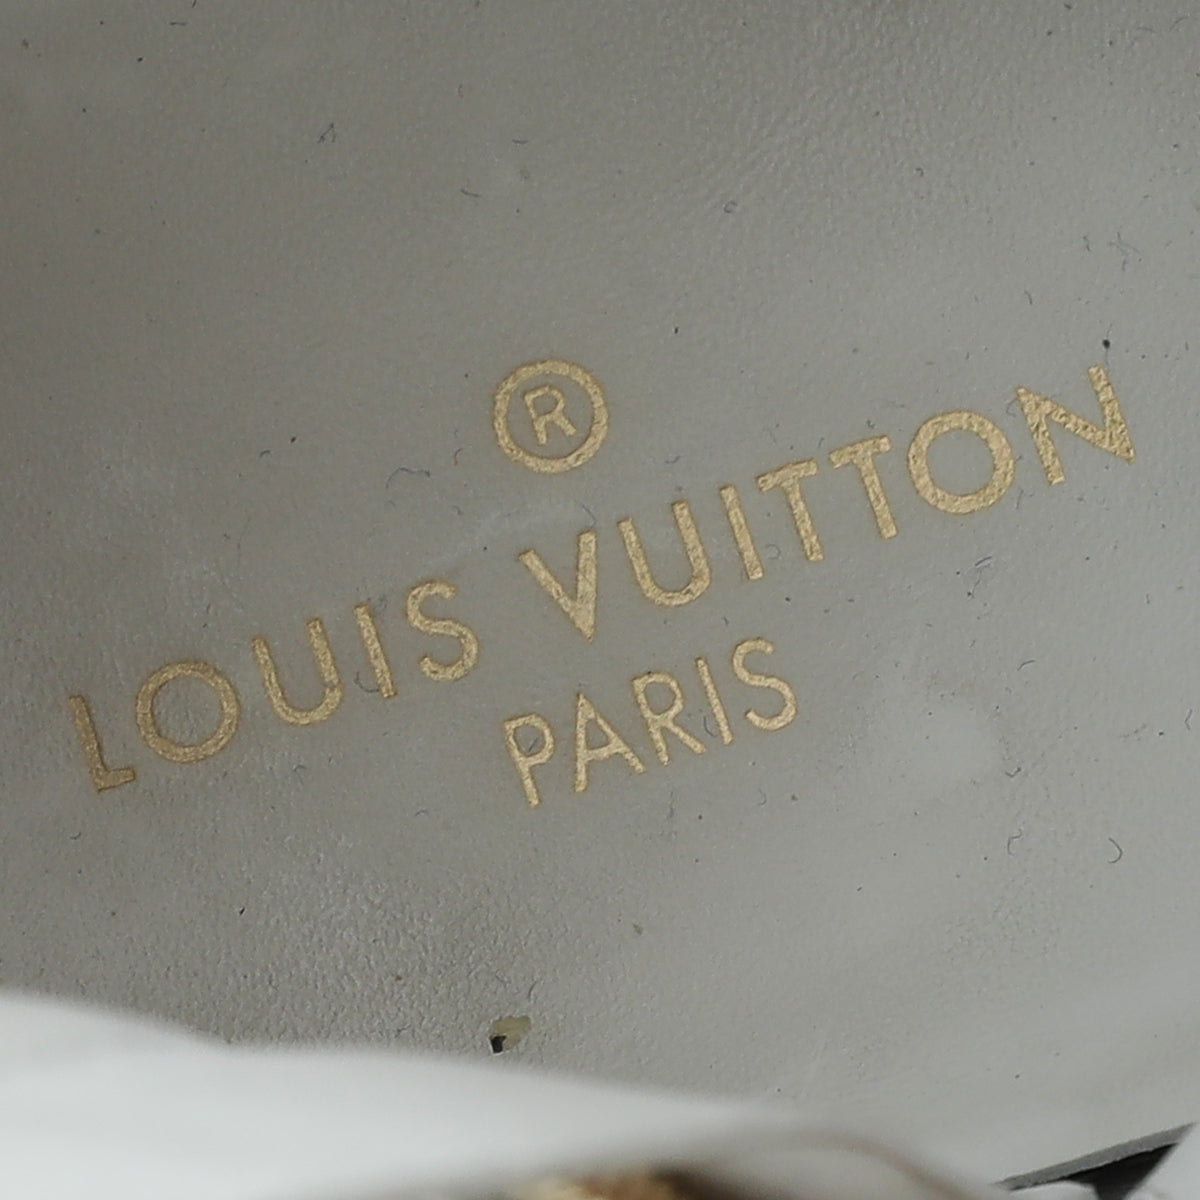 Louis Vuitton Bicolor Monogram Mesh Stellar High Top Sneakers 36.5